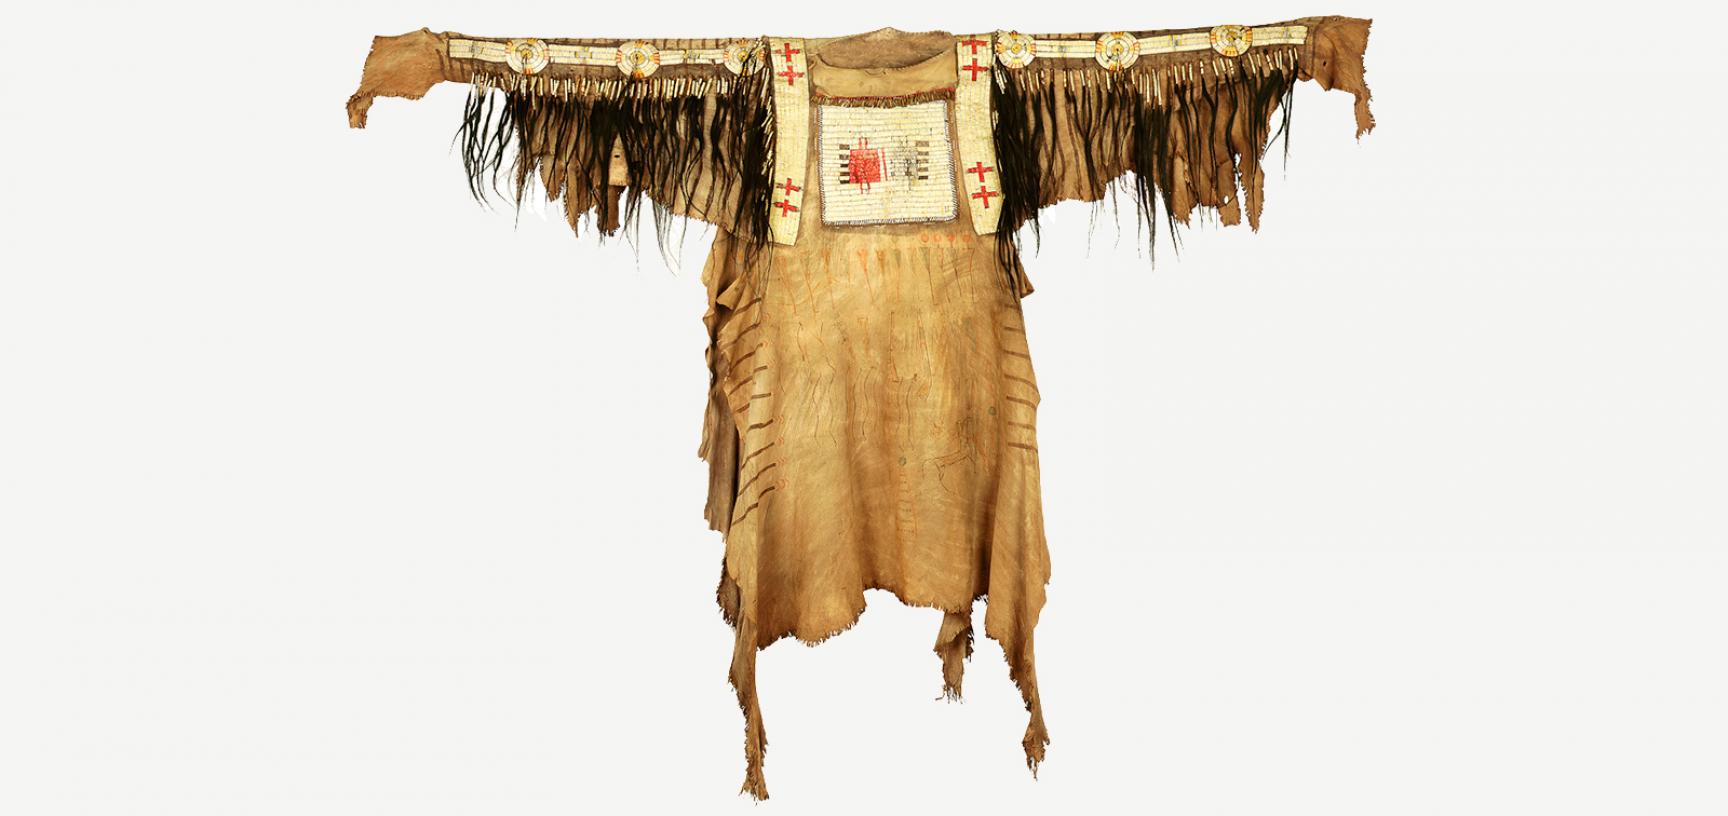 Blackfoot hide shirt (1893.67.1) after conservation